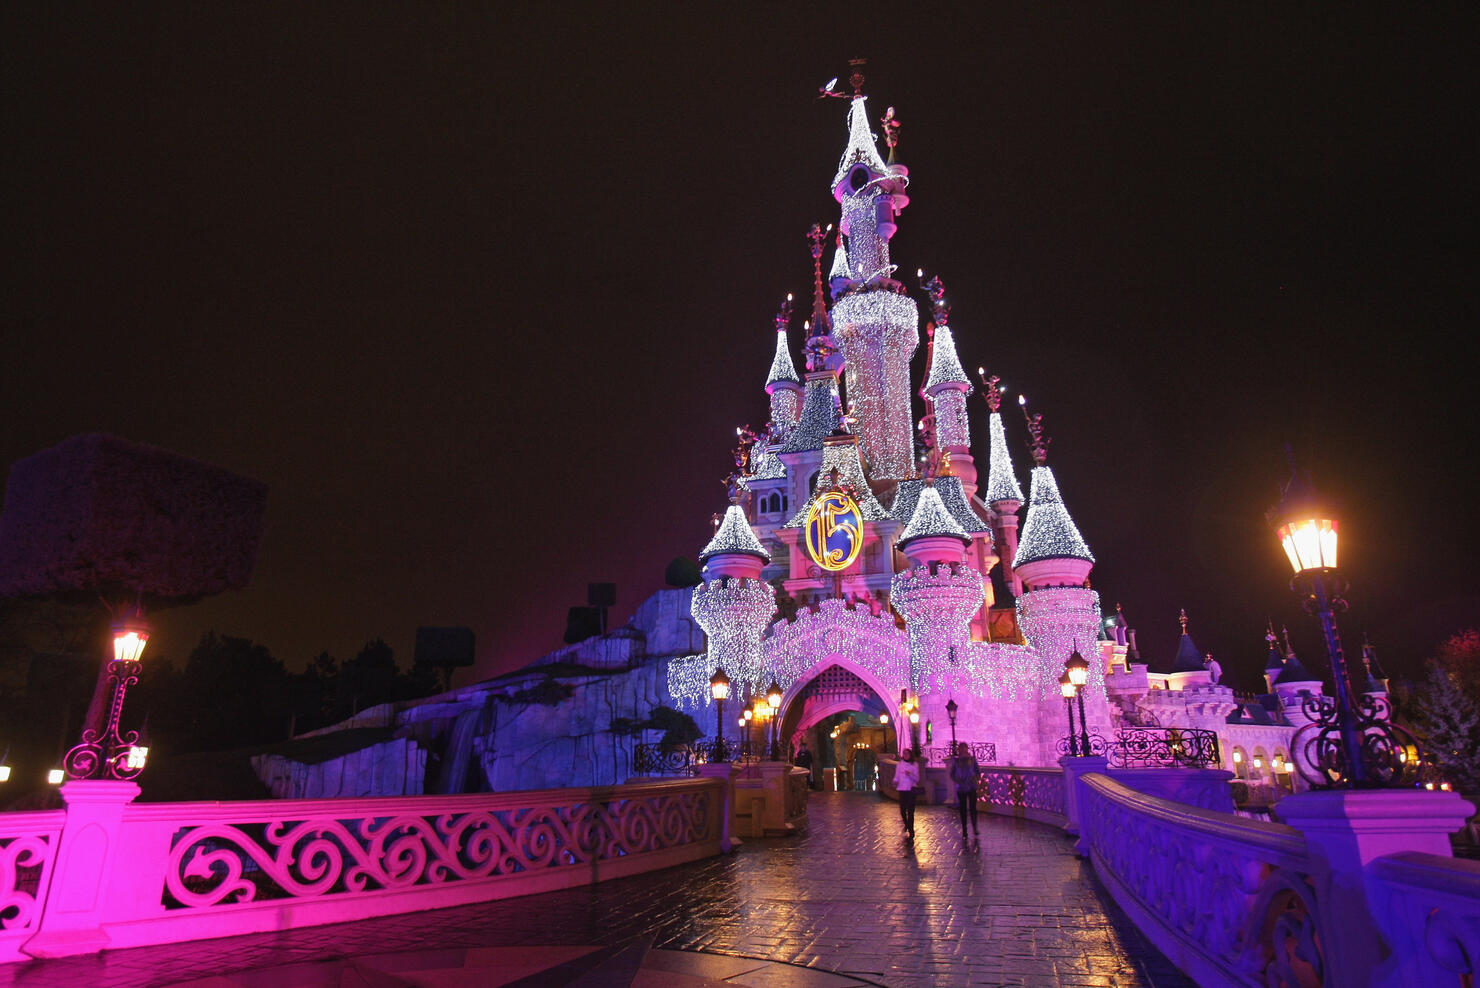 Sleeping beauty Castle at night with Christmas lights, Disneyland Park, Disneyland  Paris